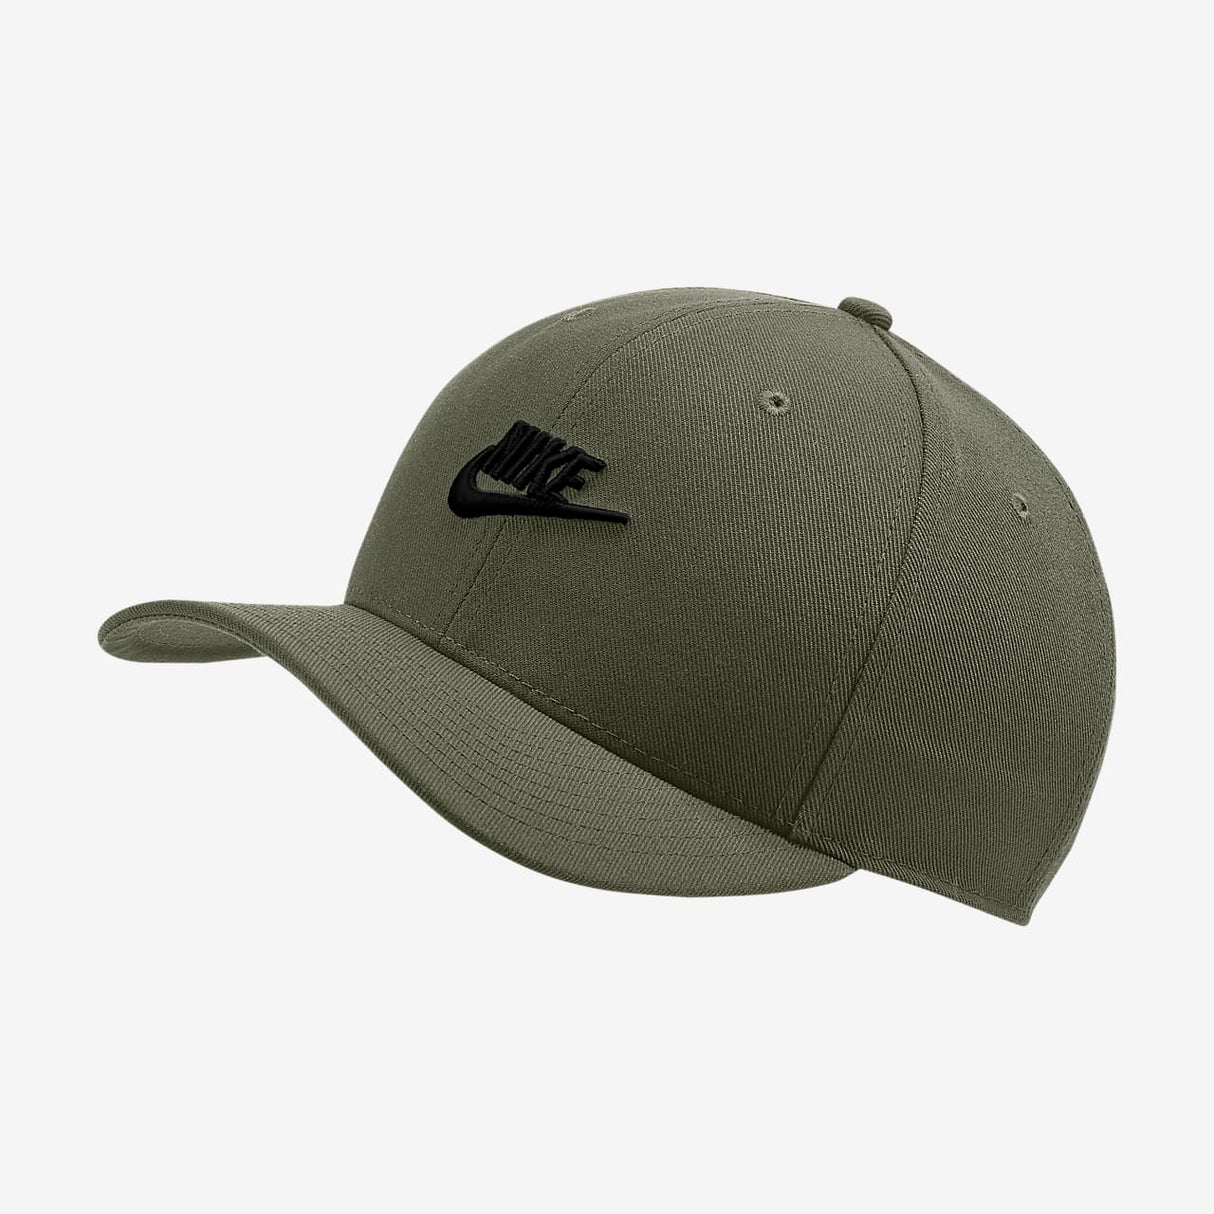 Nike Sportswear Classic 99 Adjustable Cap in Medium Olive/Black